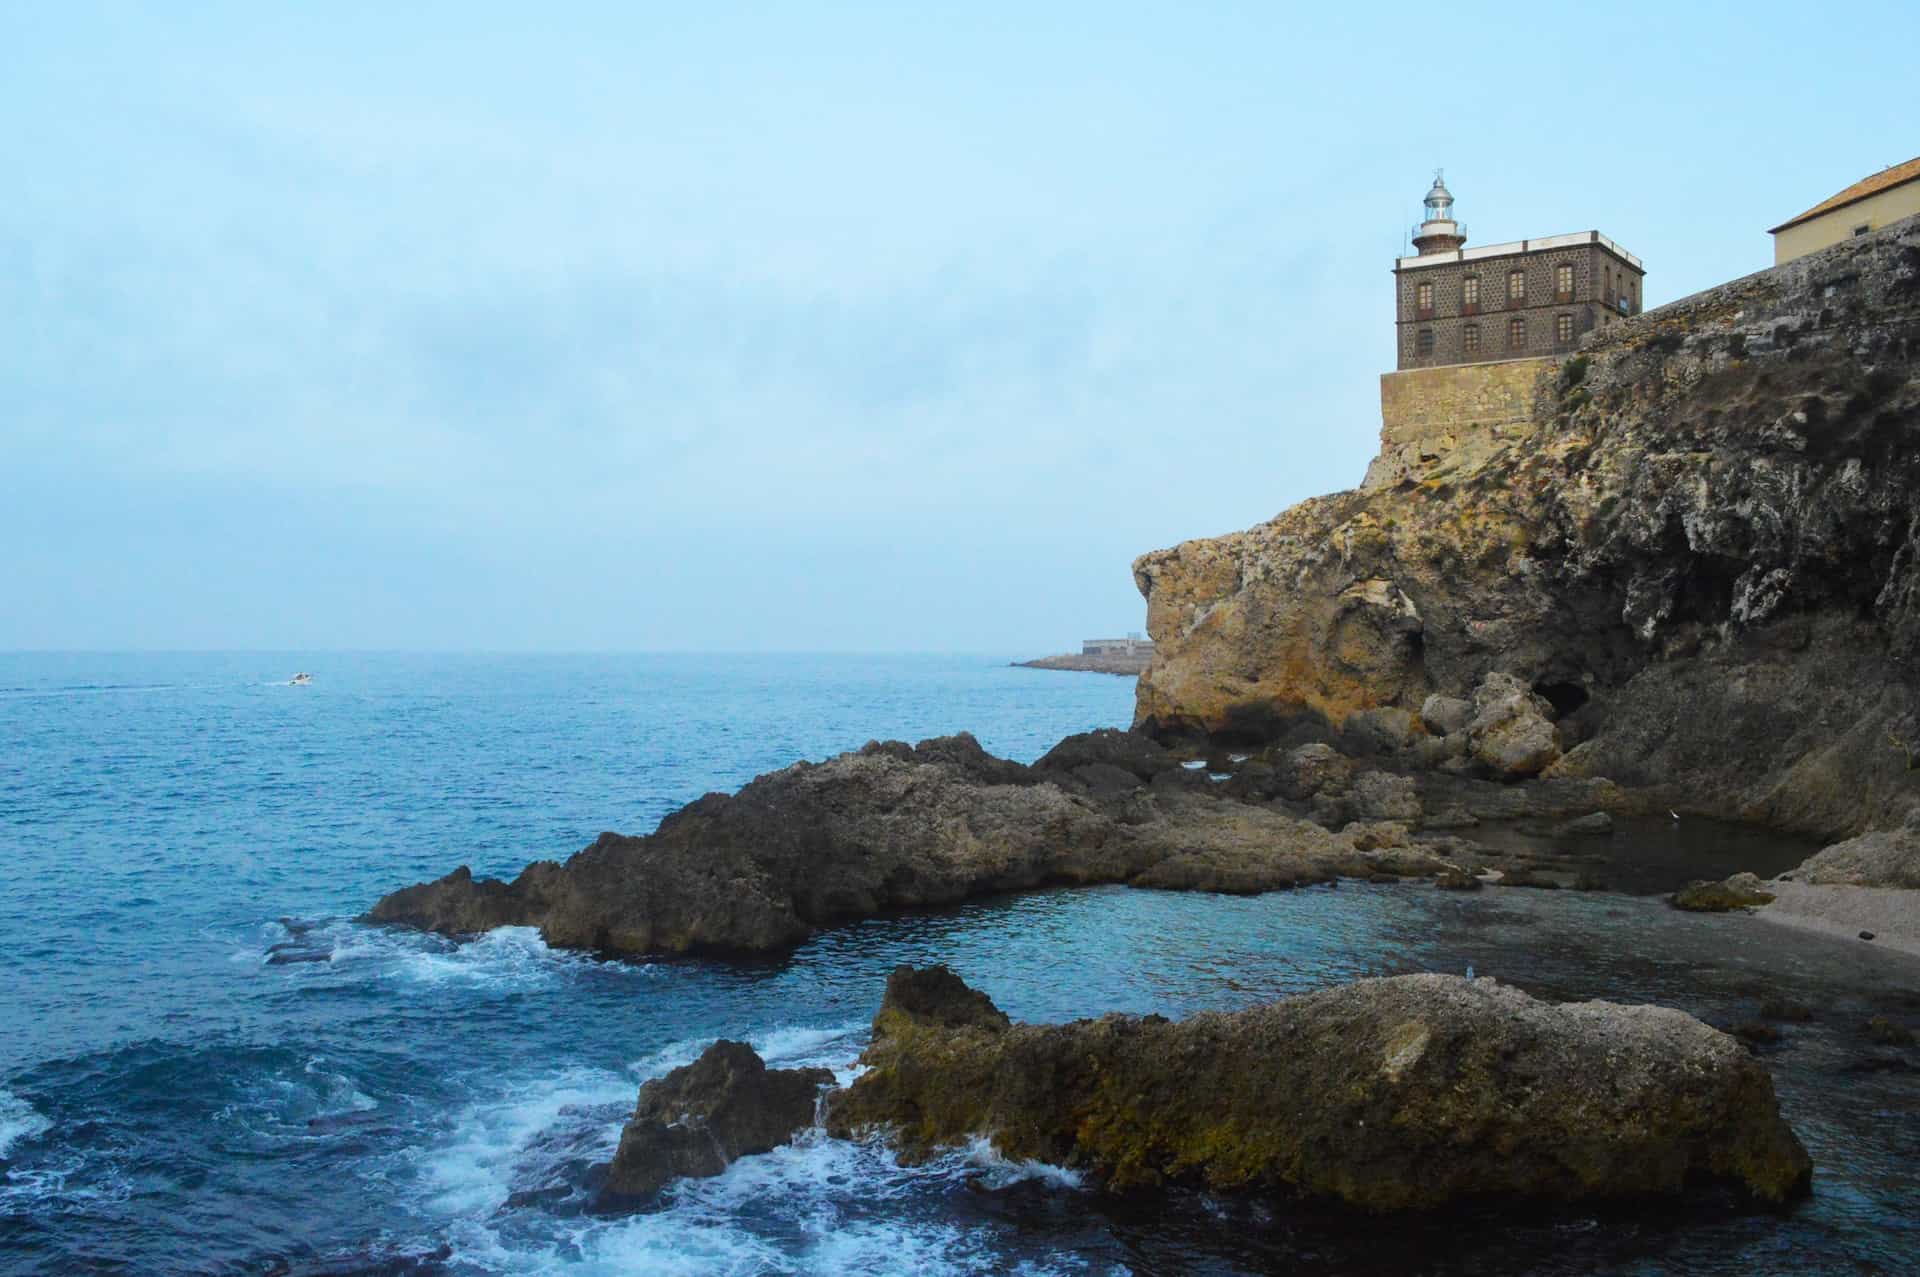 Landmark buildings on rock cliffs over the ocean in Melilla, Spain.